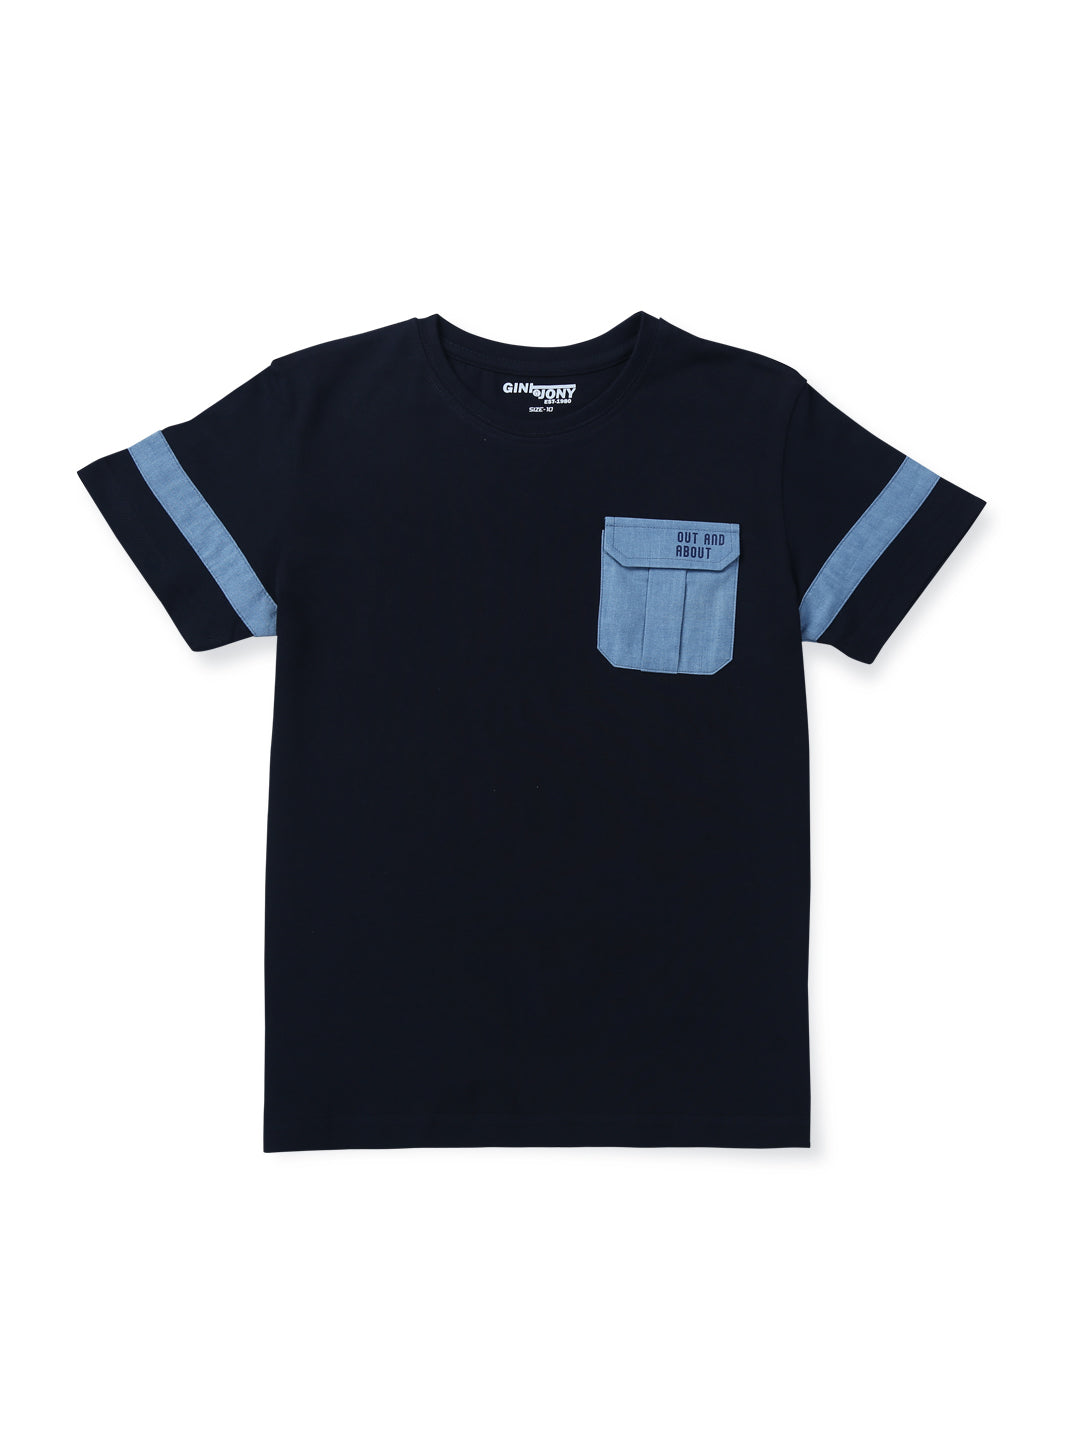 Boys Navy Blue Cotton Solid T-Shirt